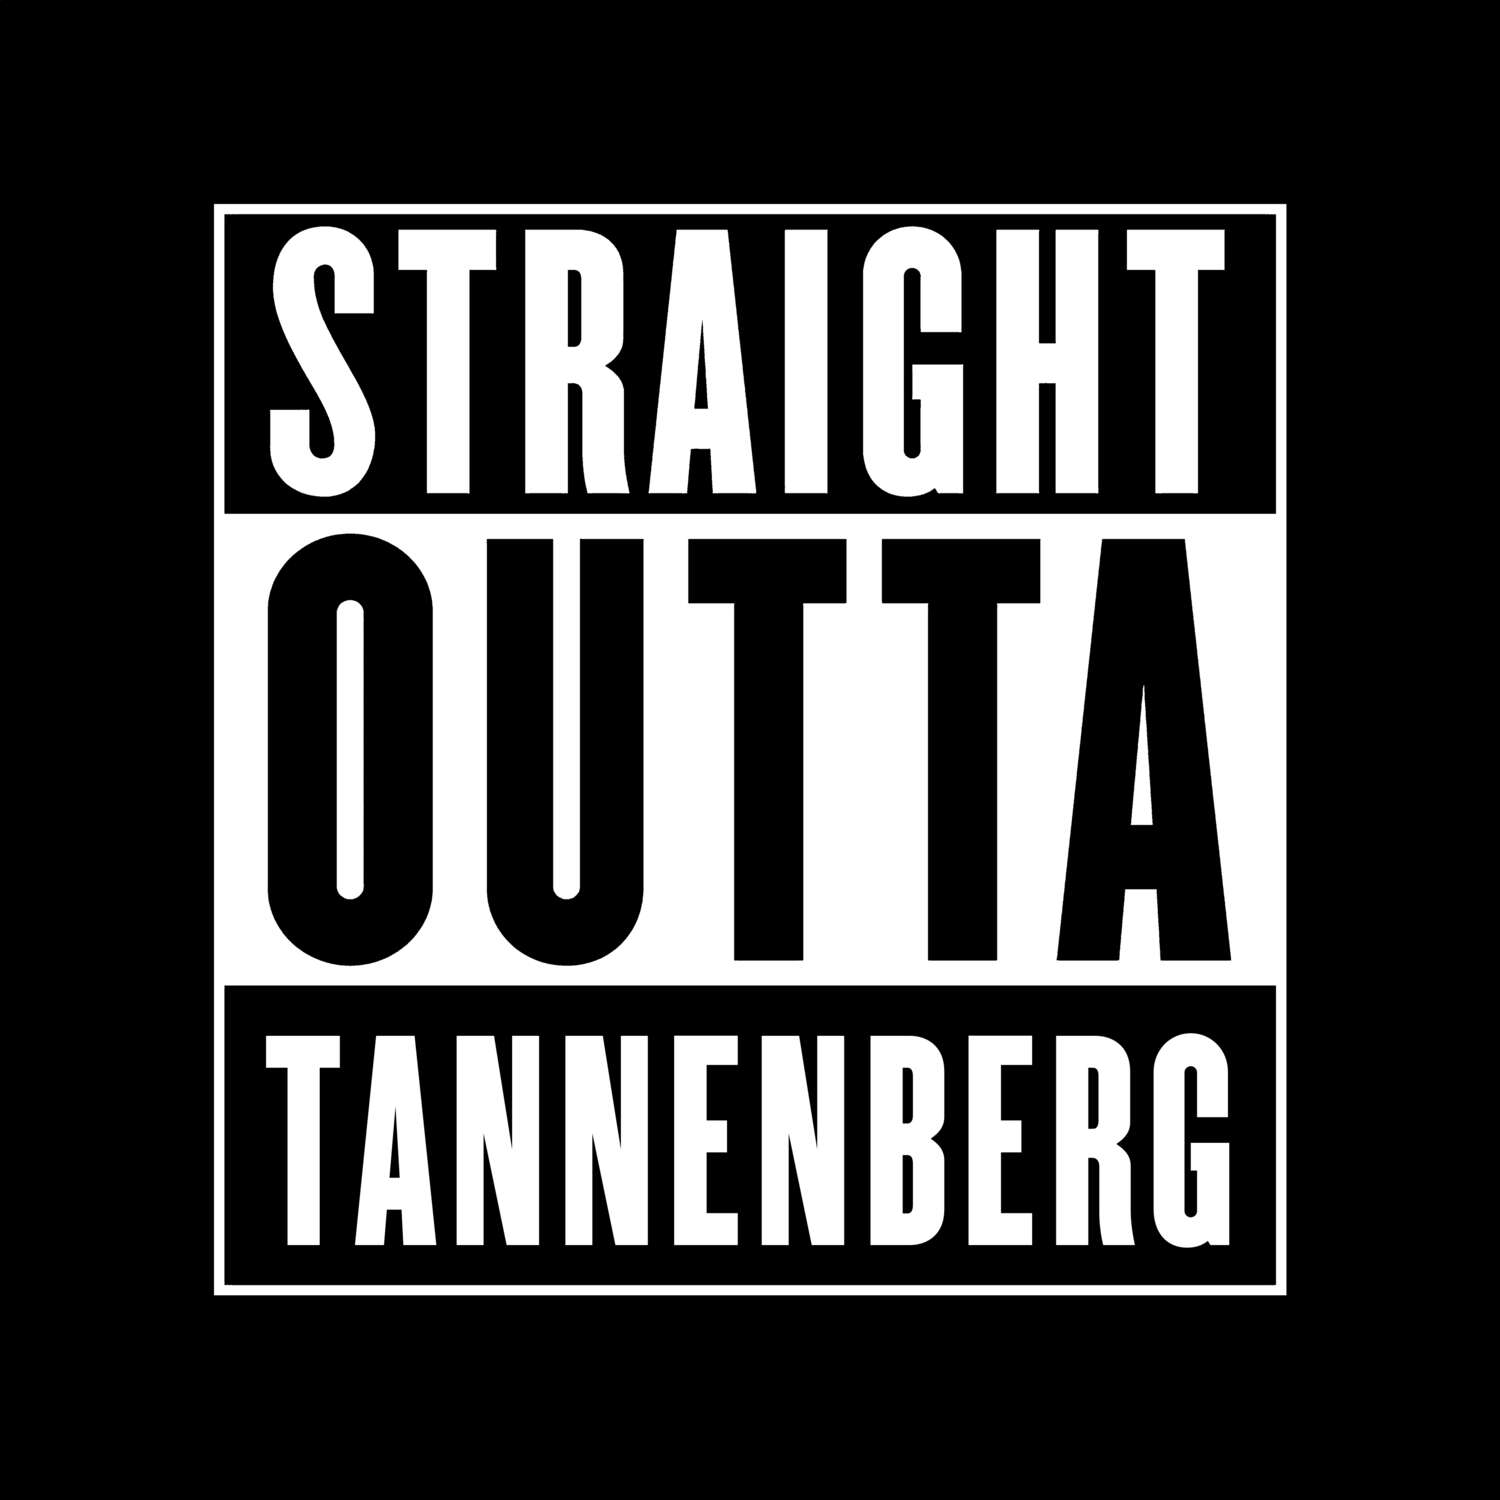 Tannenberg T-Shirt »Straight Outta«